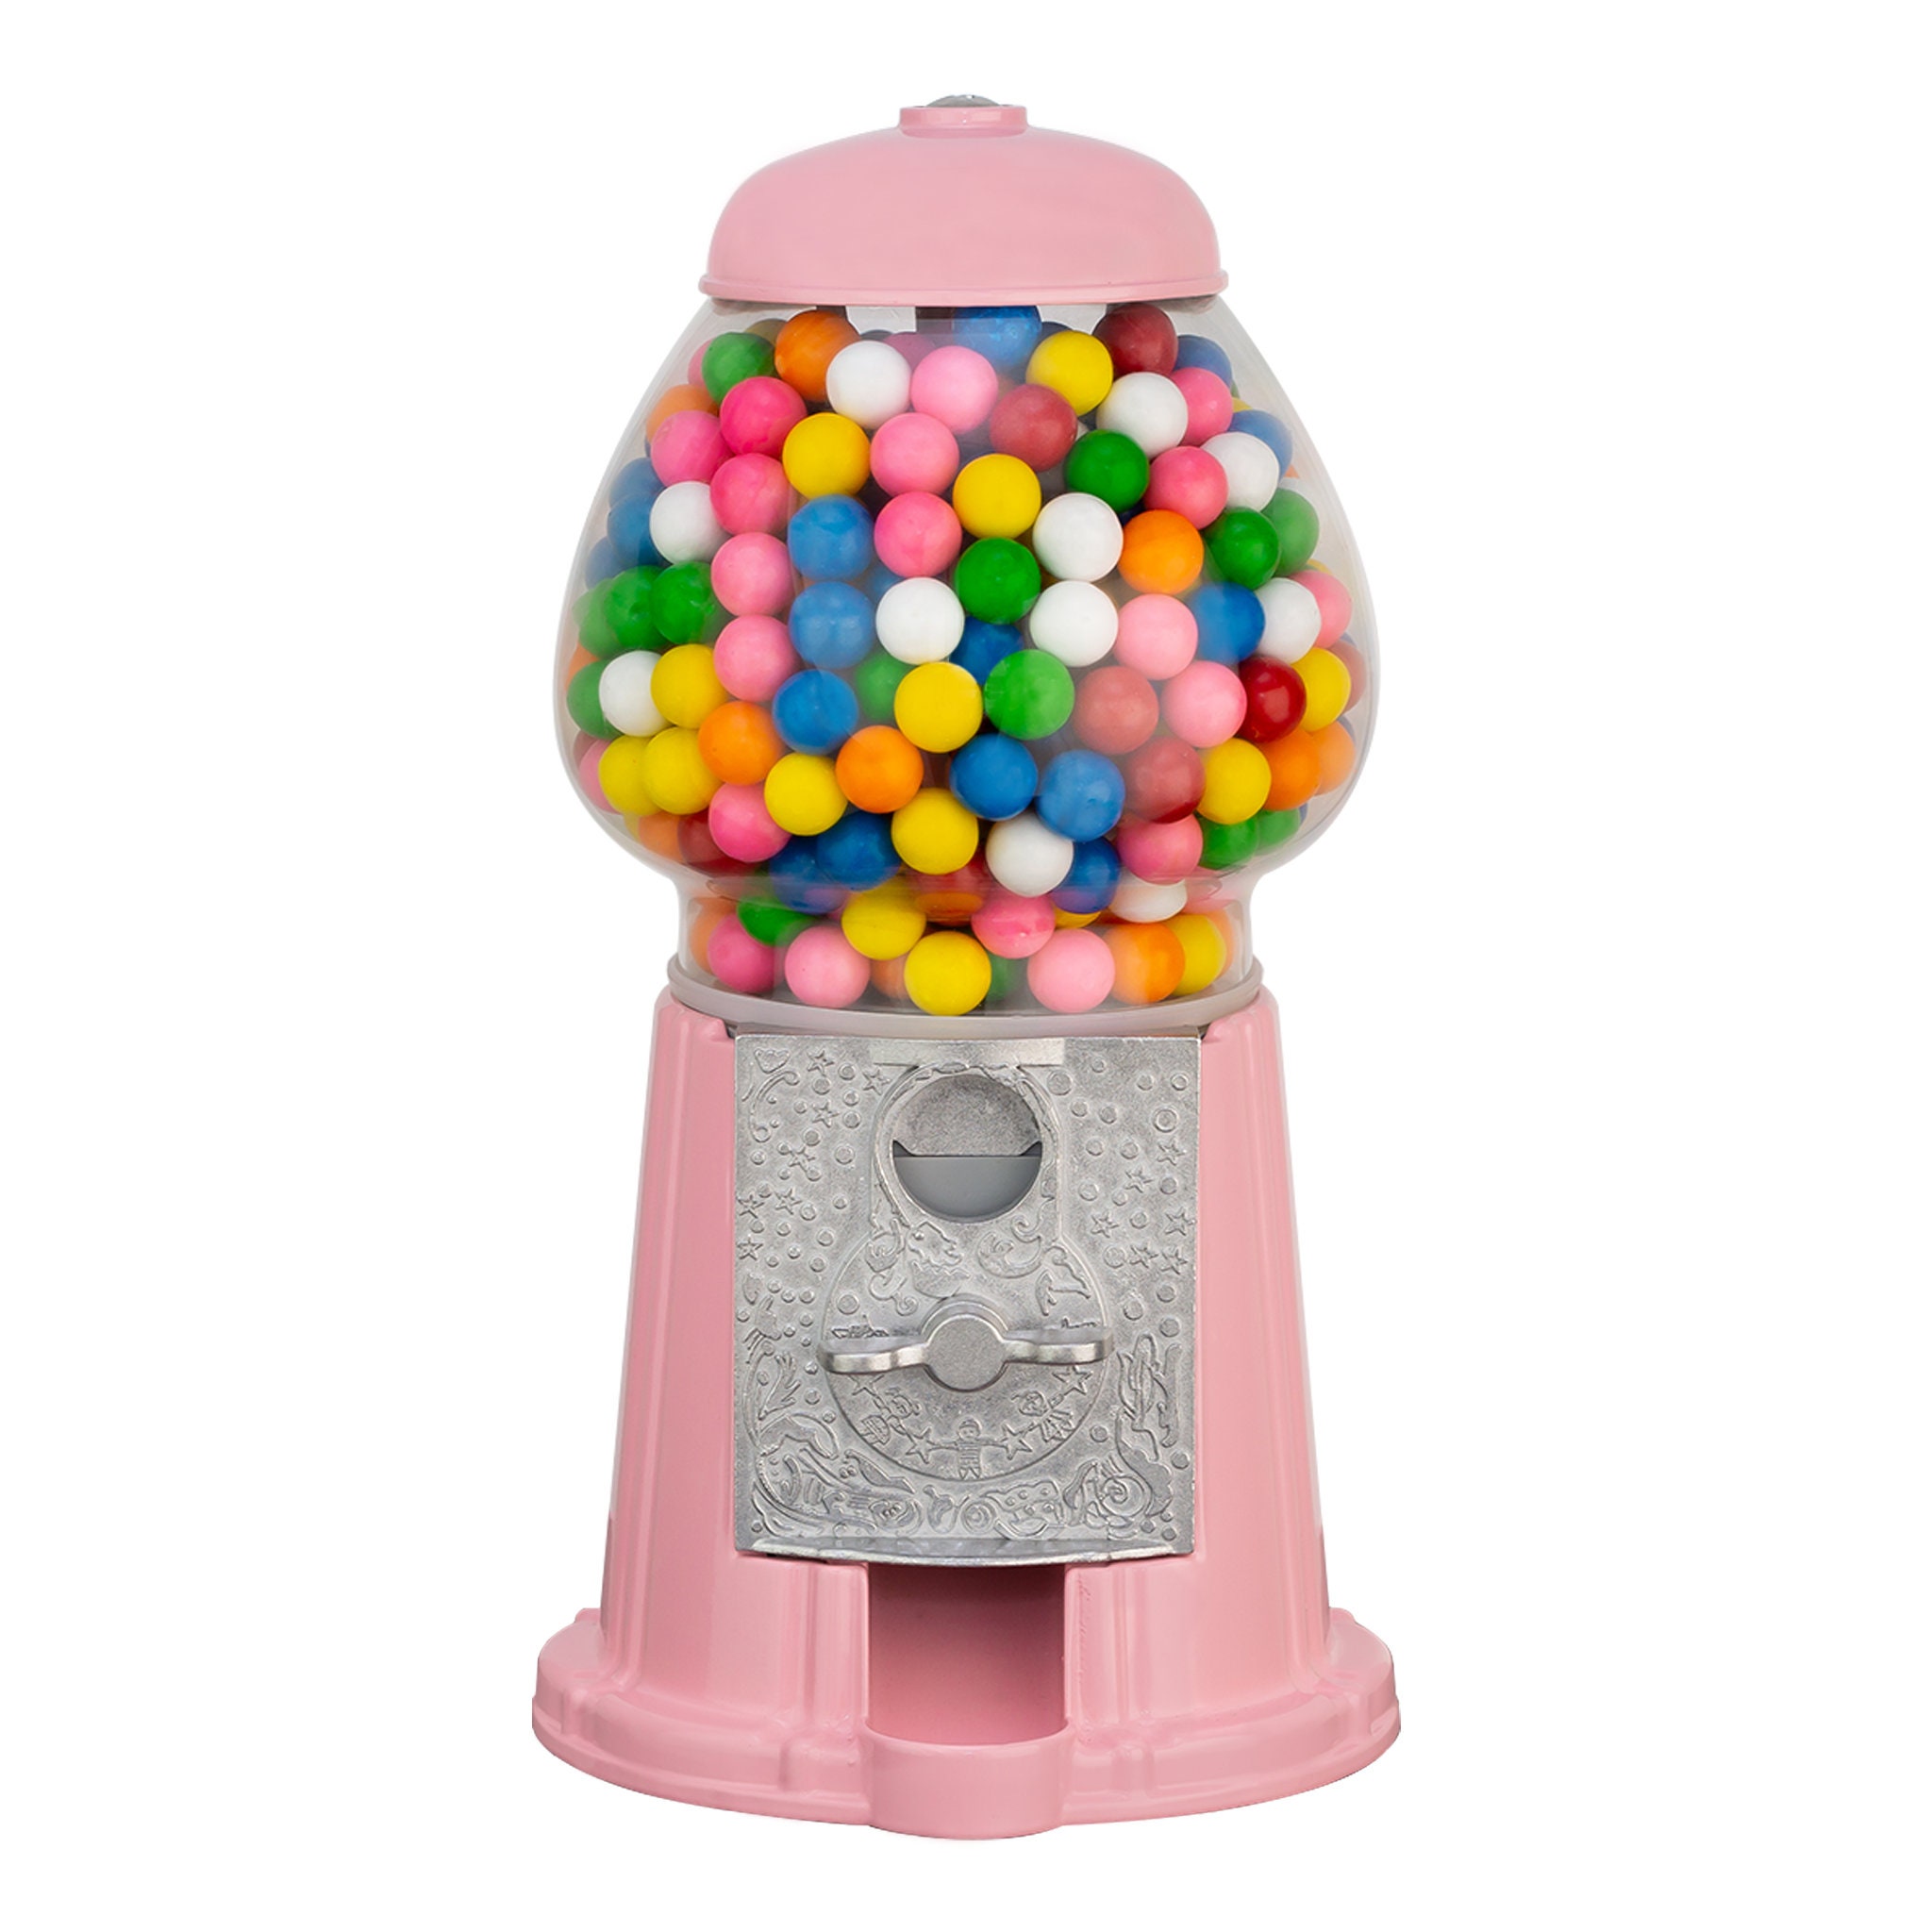 Gumball Dreams Classic Gumball Machine / Candy Dispenser